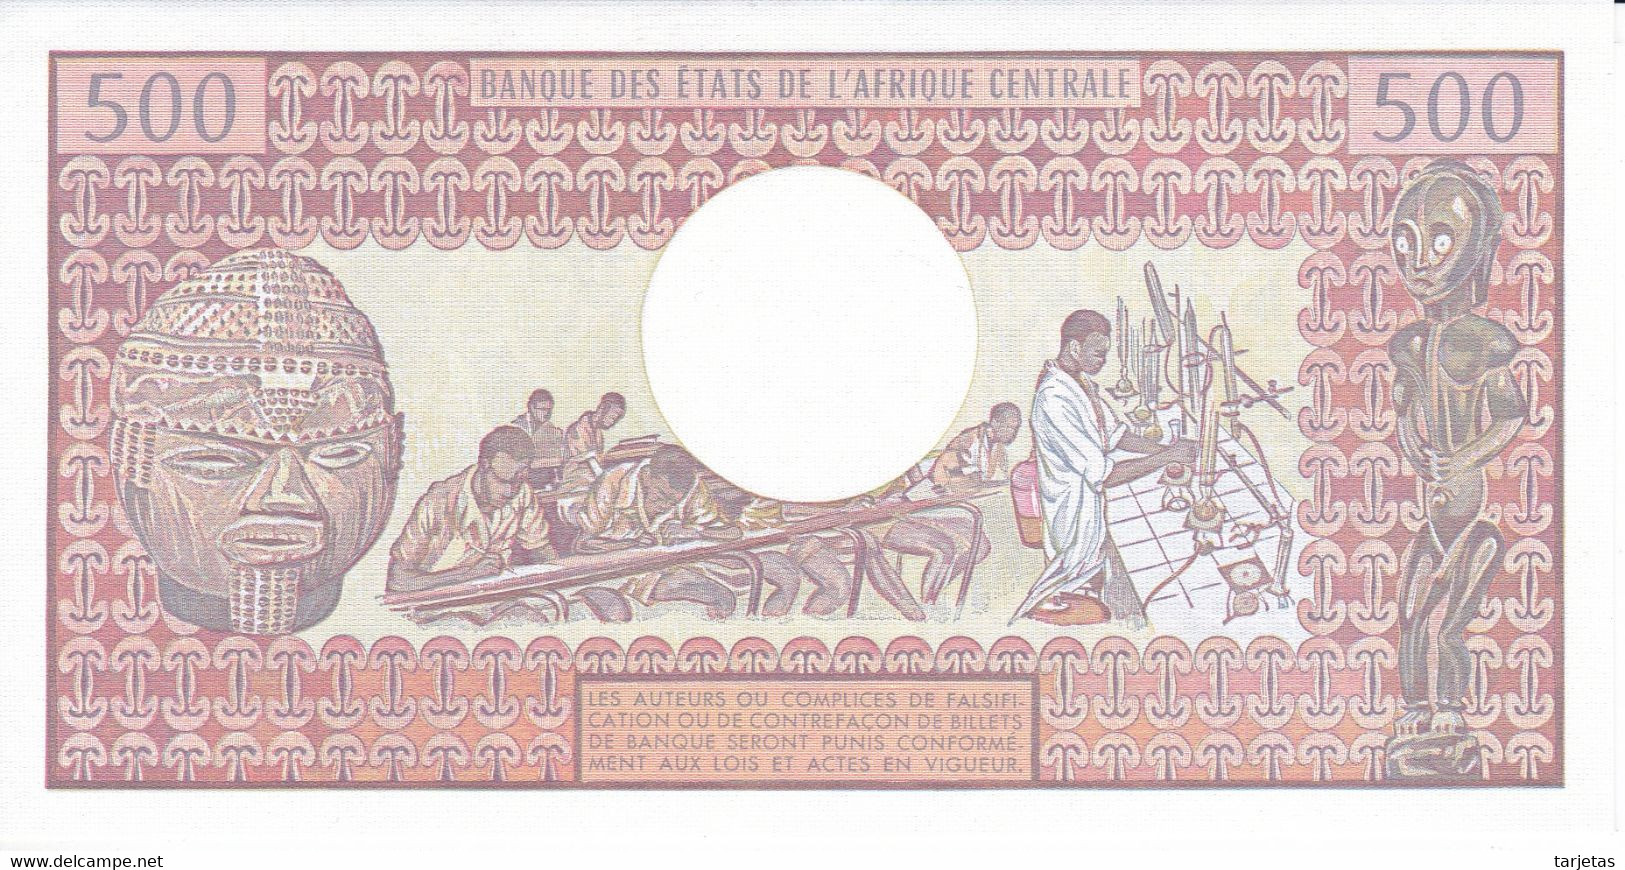 BILLETE DE TCHAD DE 500 FRANCS DEL AÑO 1984 SIN CIRCULAR-UNCIRCULATED  (BANKNOTE) - Tsjaad